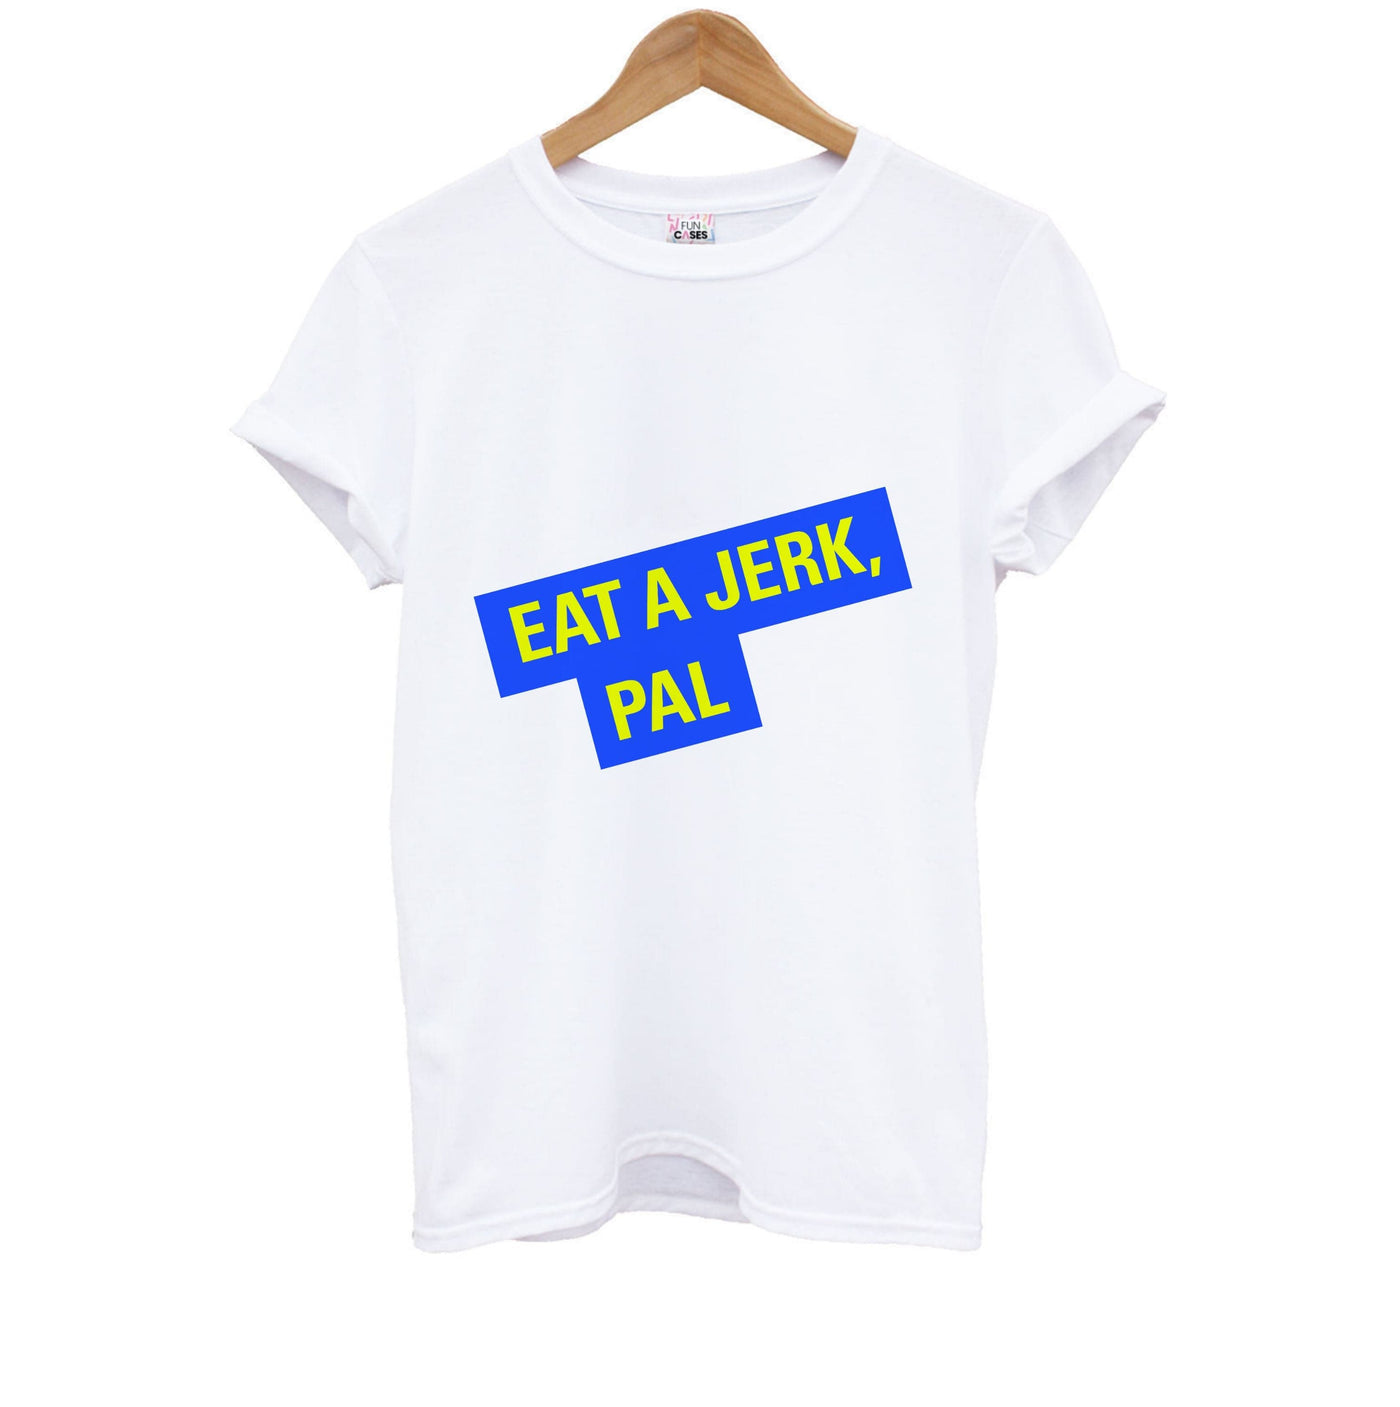 Eat A jerk, Pal - Brooklyn Nine-Nine Kids T-Shirt